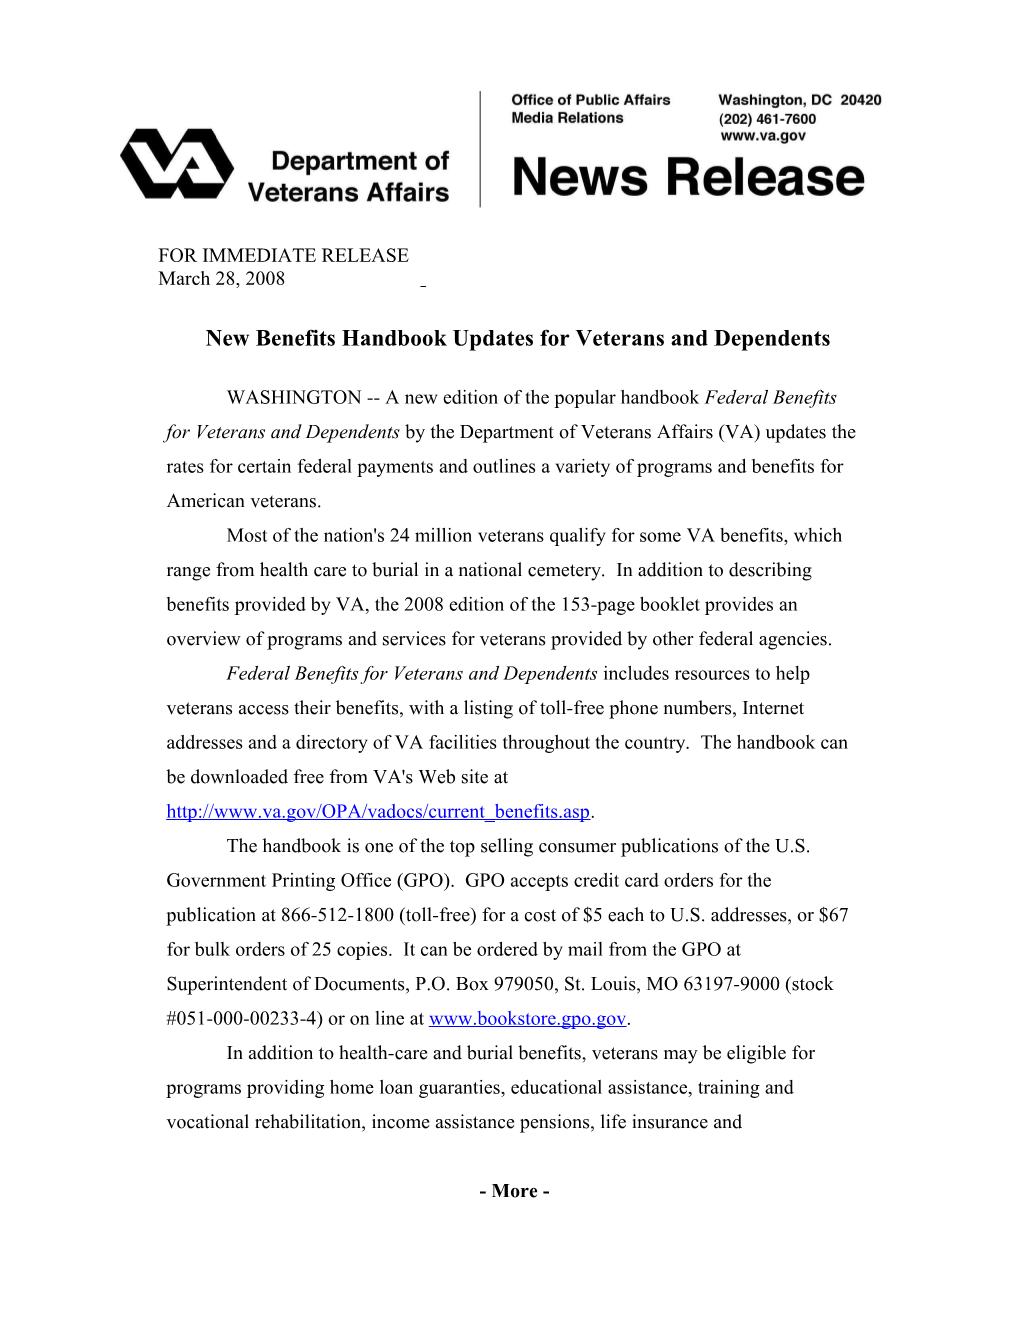 New Benefits Handbook Updates for Veterans and Dependents